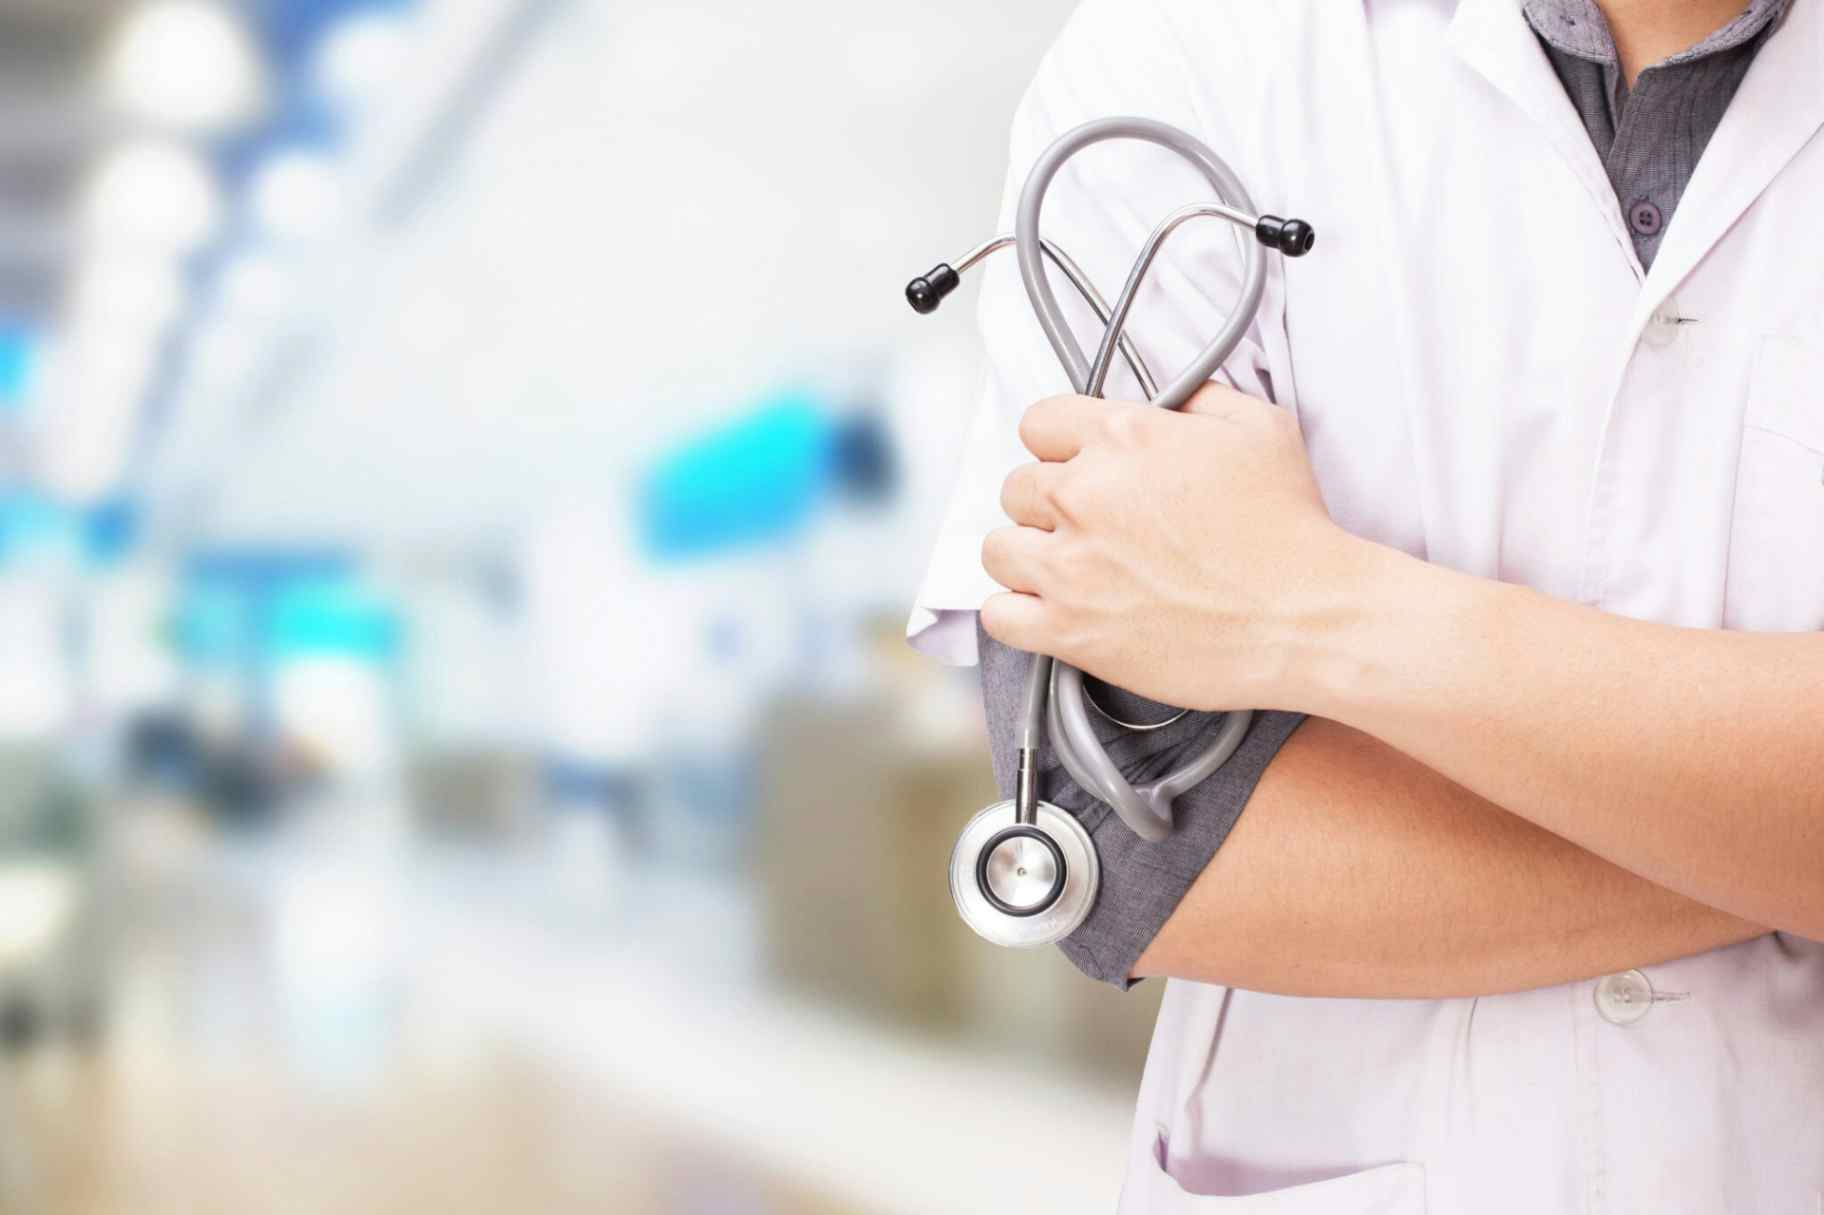 Medical specialist shortage ‘critical’